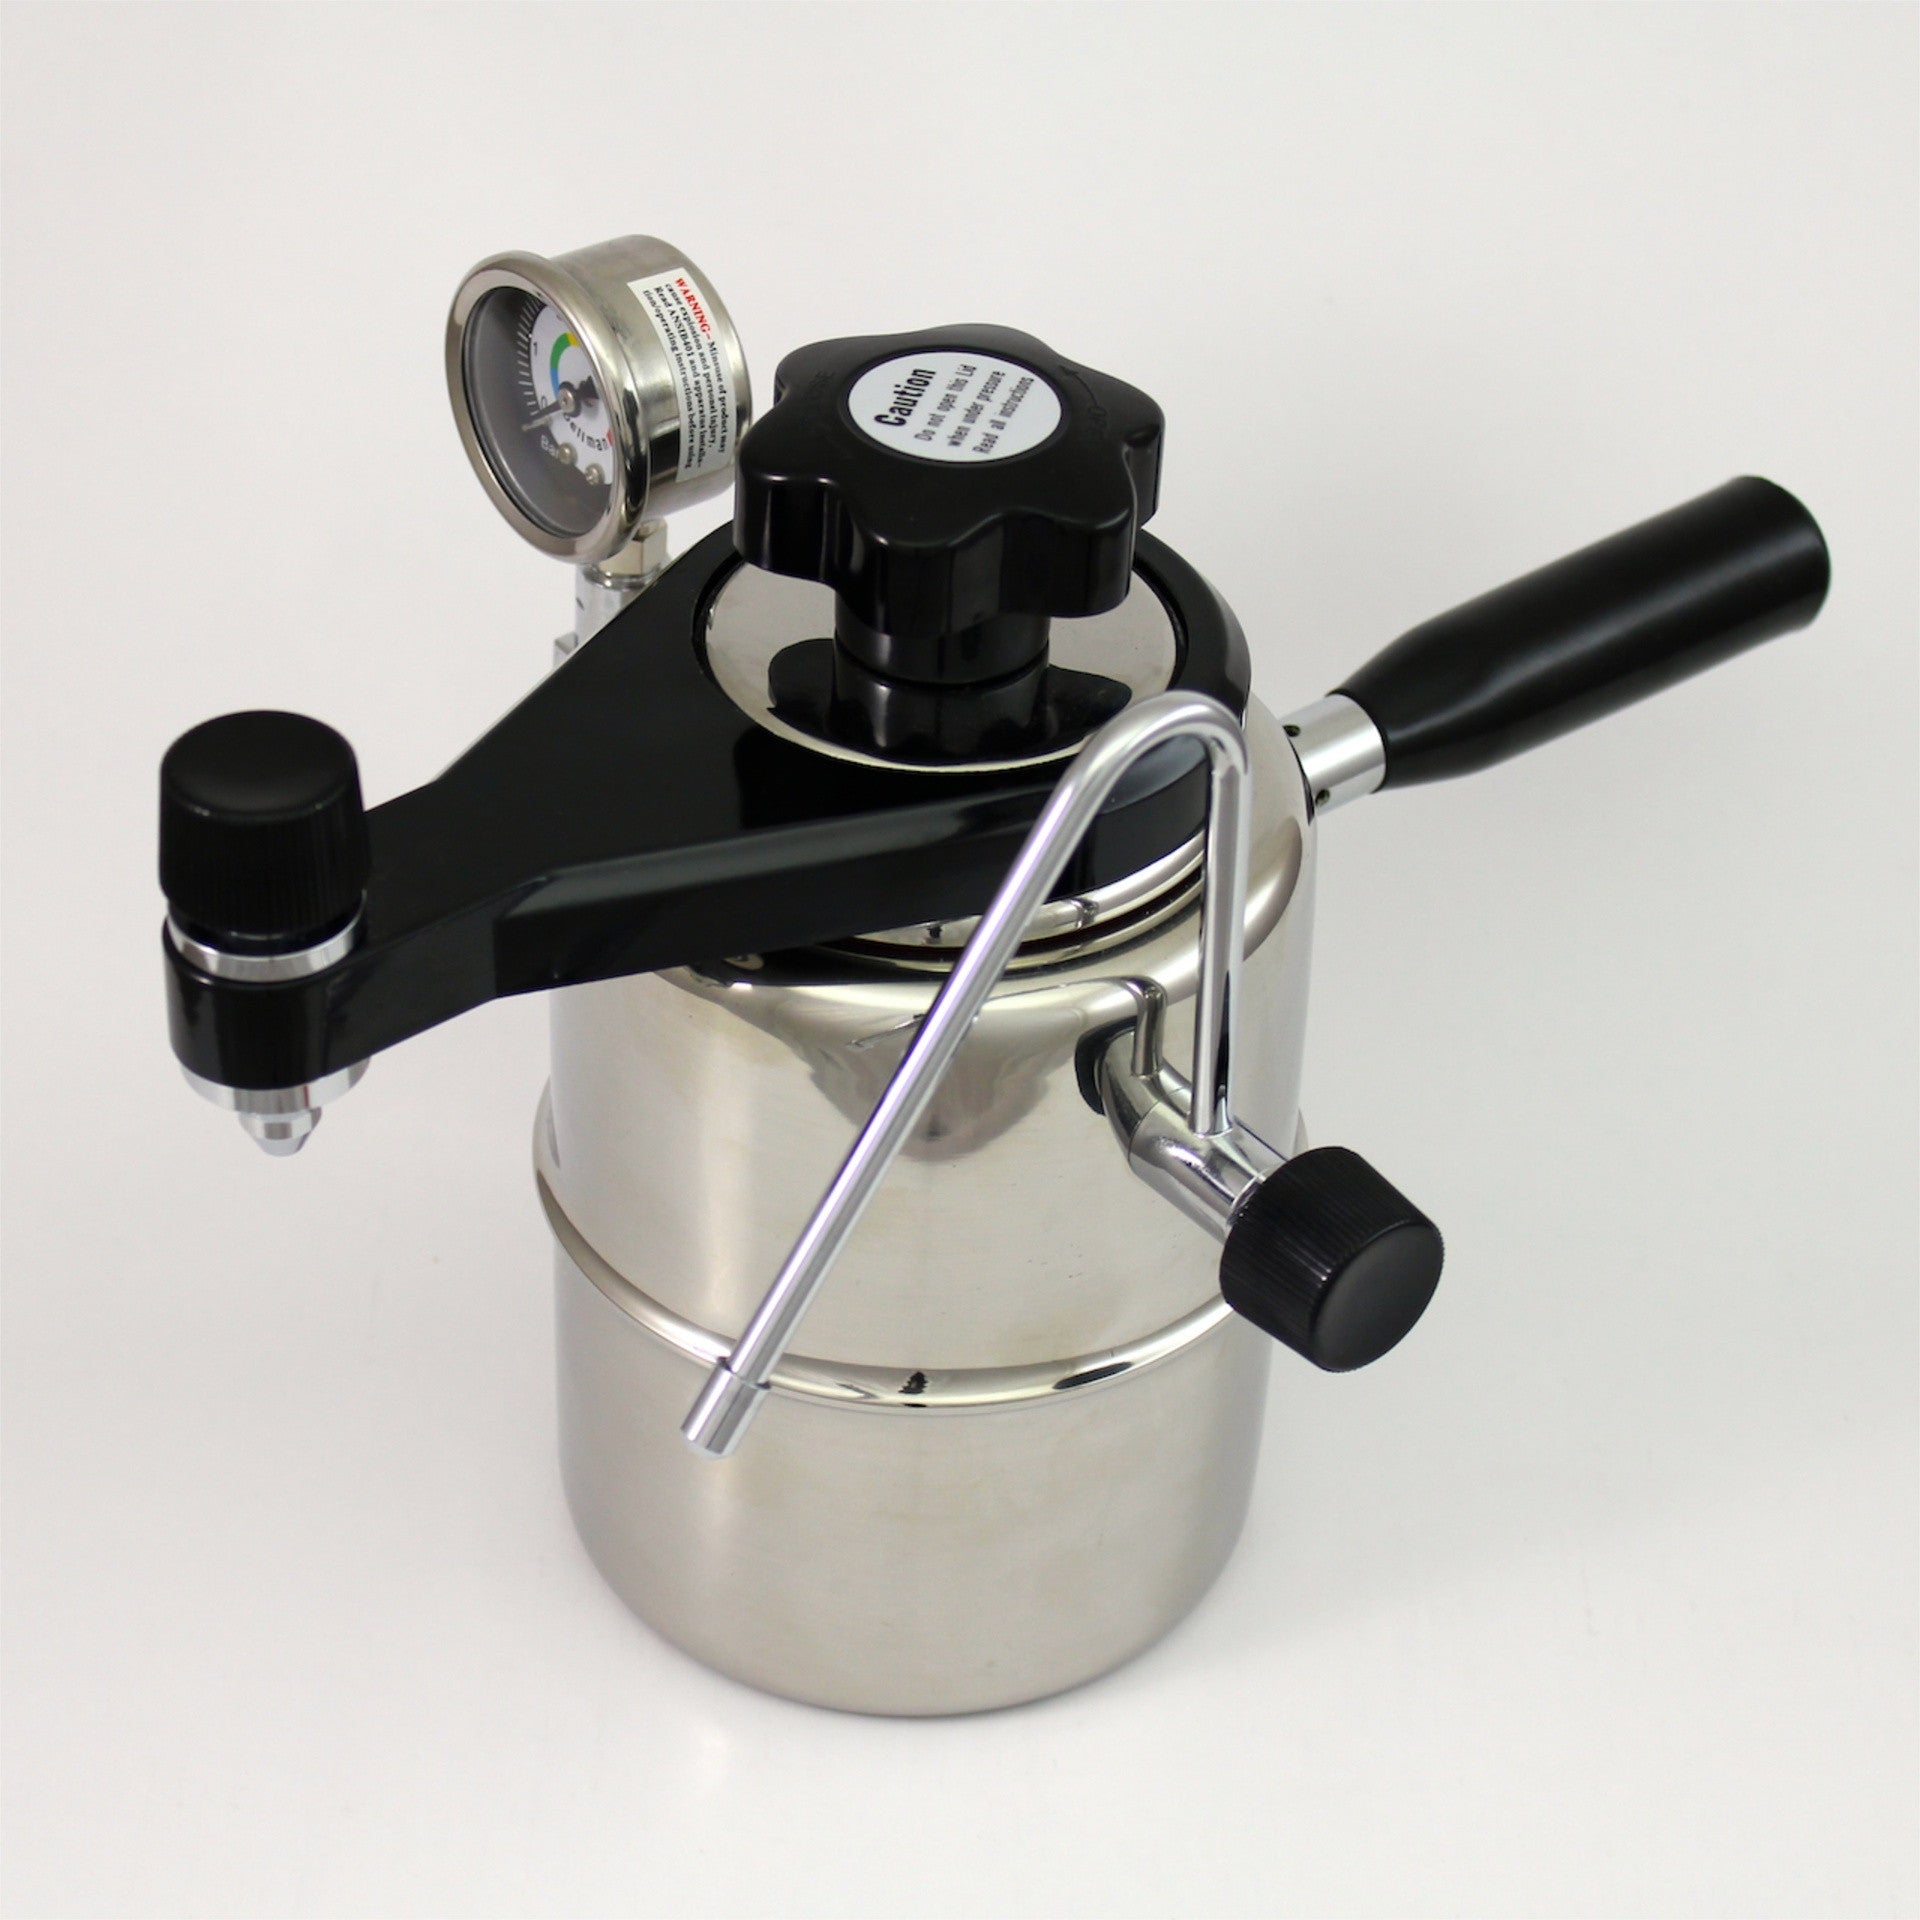 BELLMAN Stovetop Espresso & Cappuccino Maker with Pressure Gauge – Someware